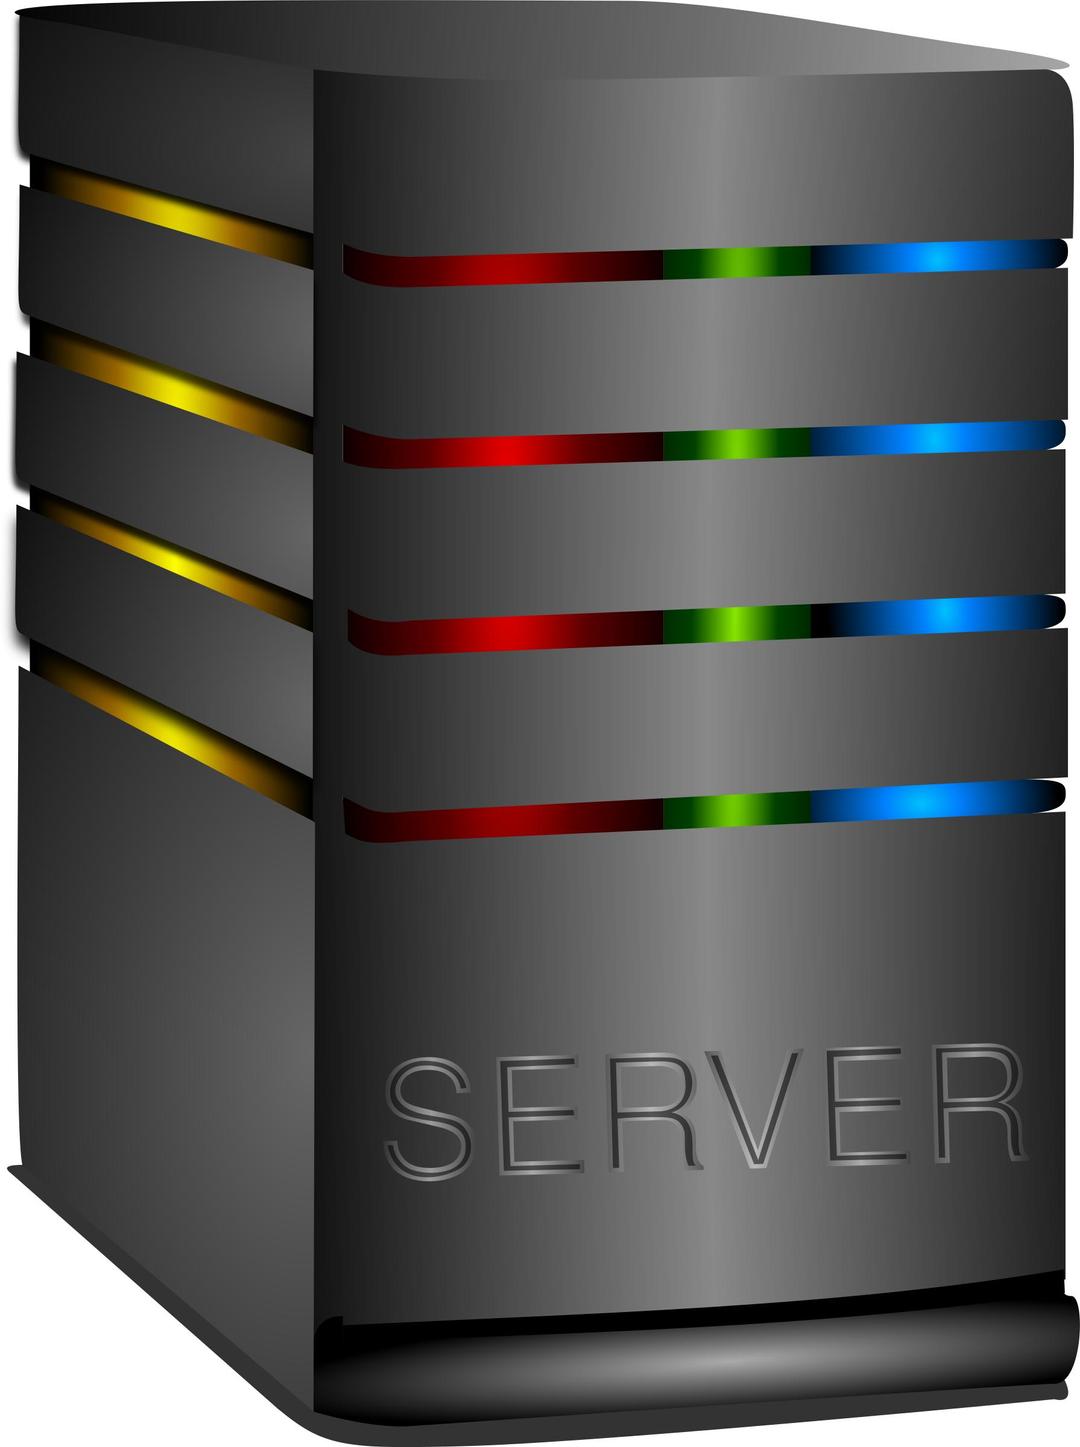 Server Remix 1 png transparent